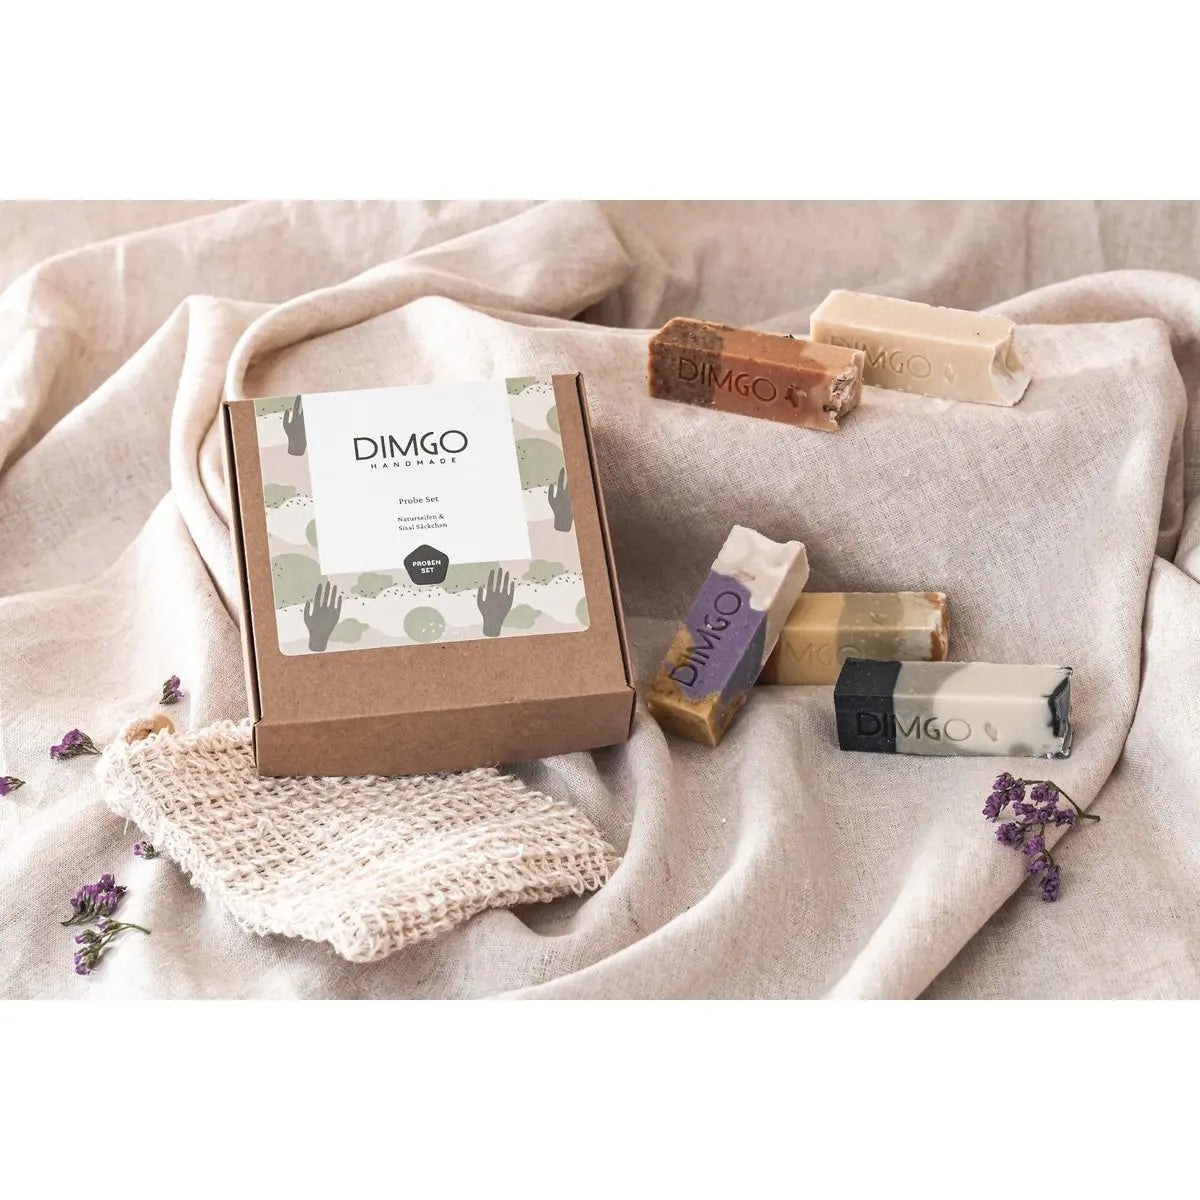 Dimgo handmade natuurlijke zeep set handgemaakteskincare